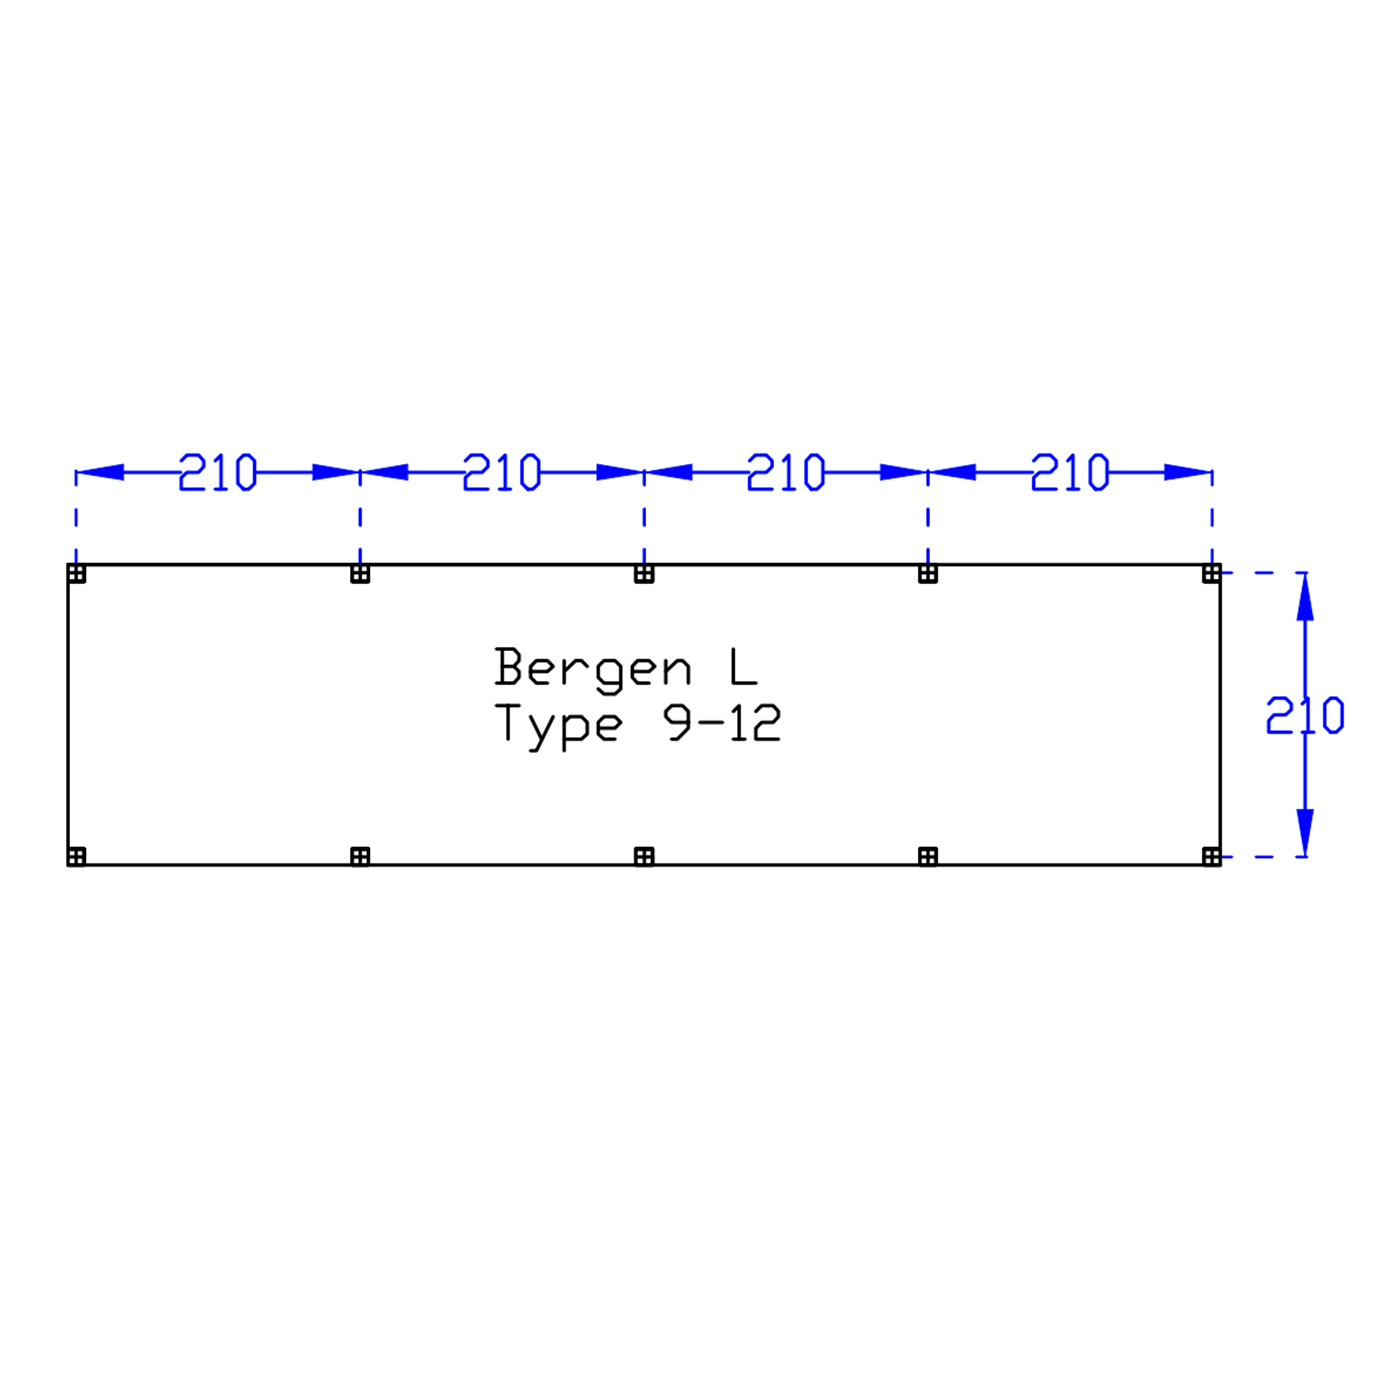 Bergen L type 9